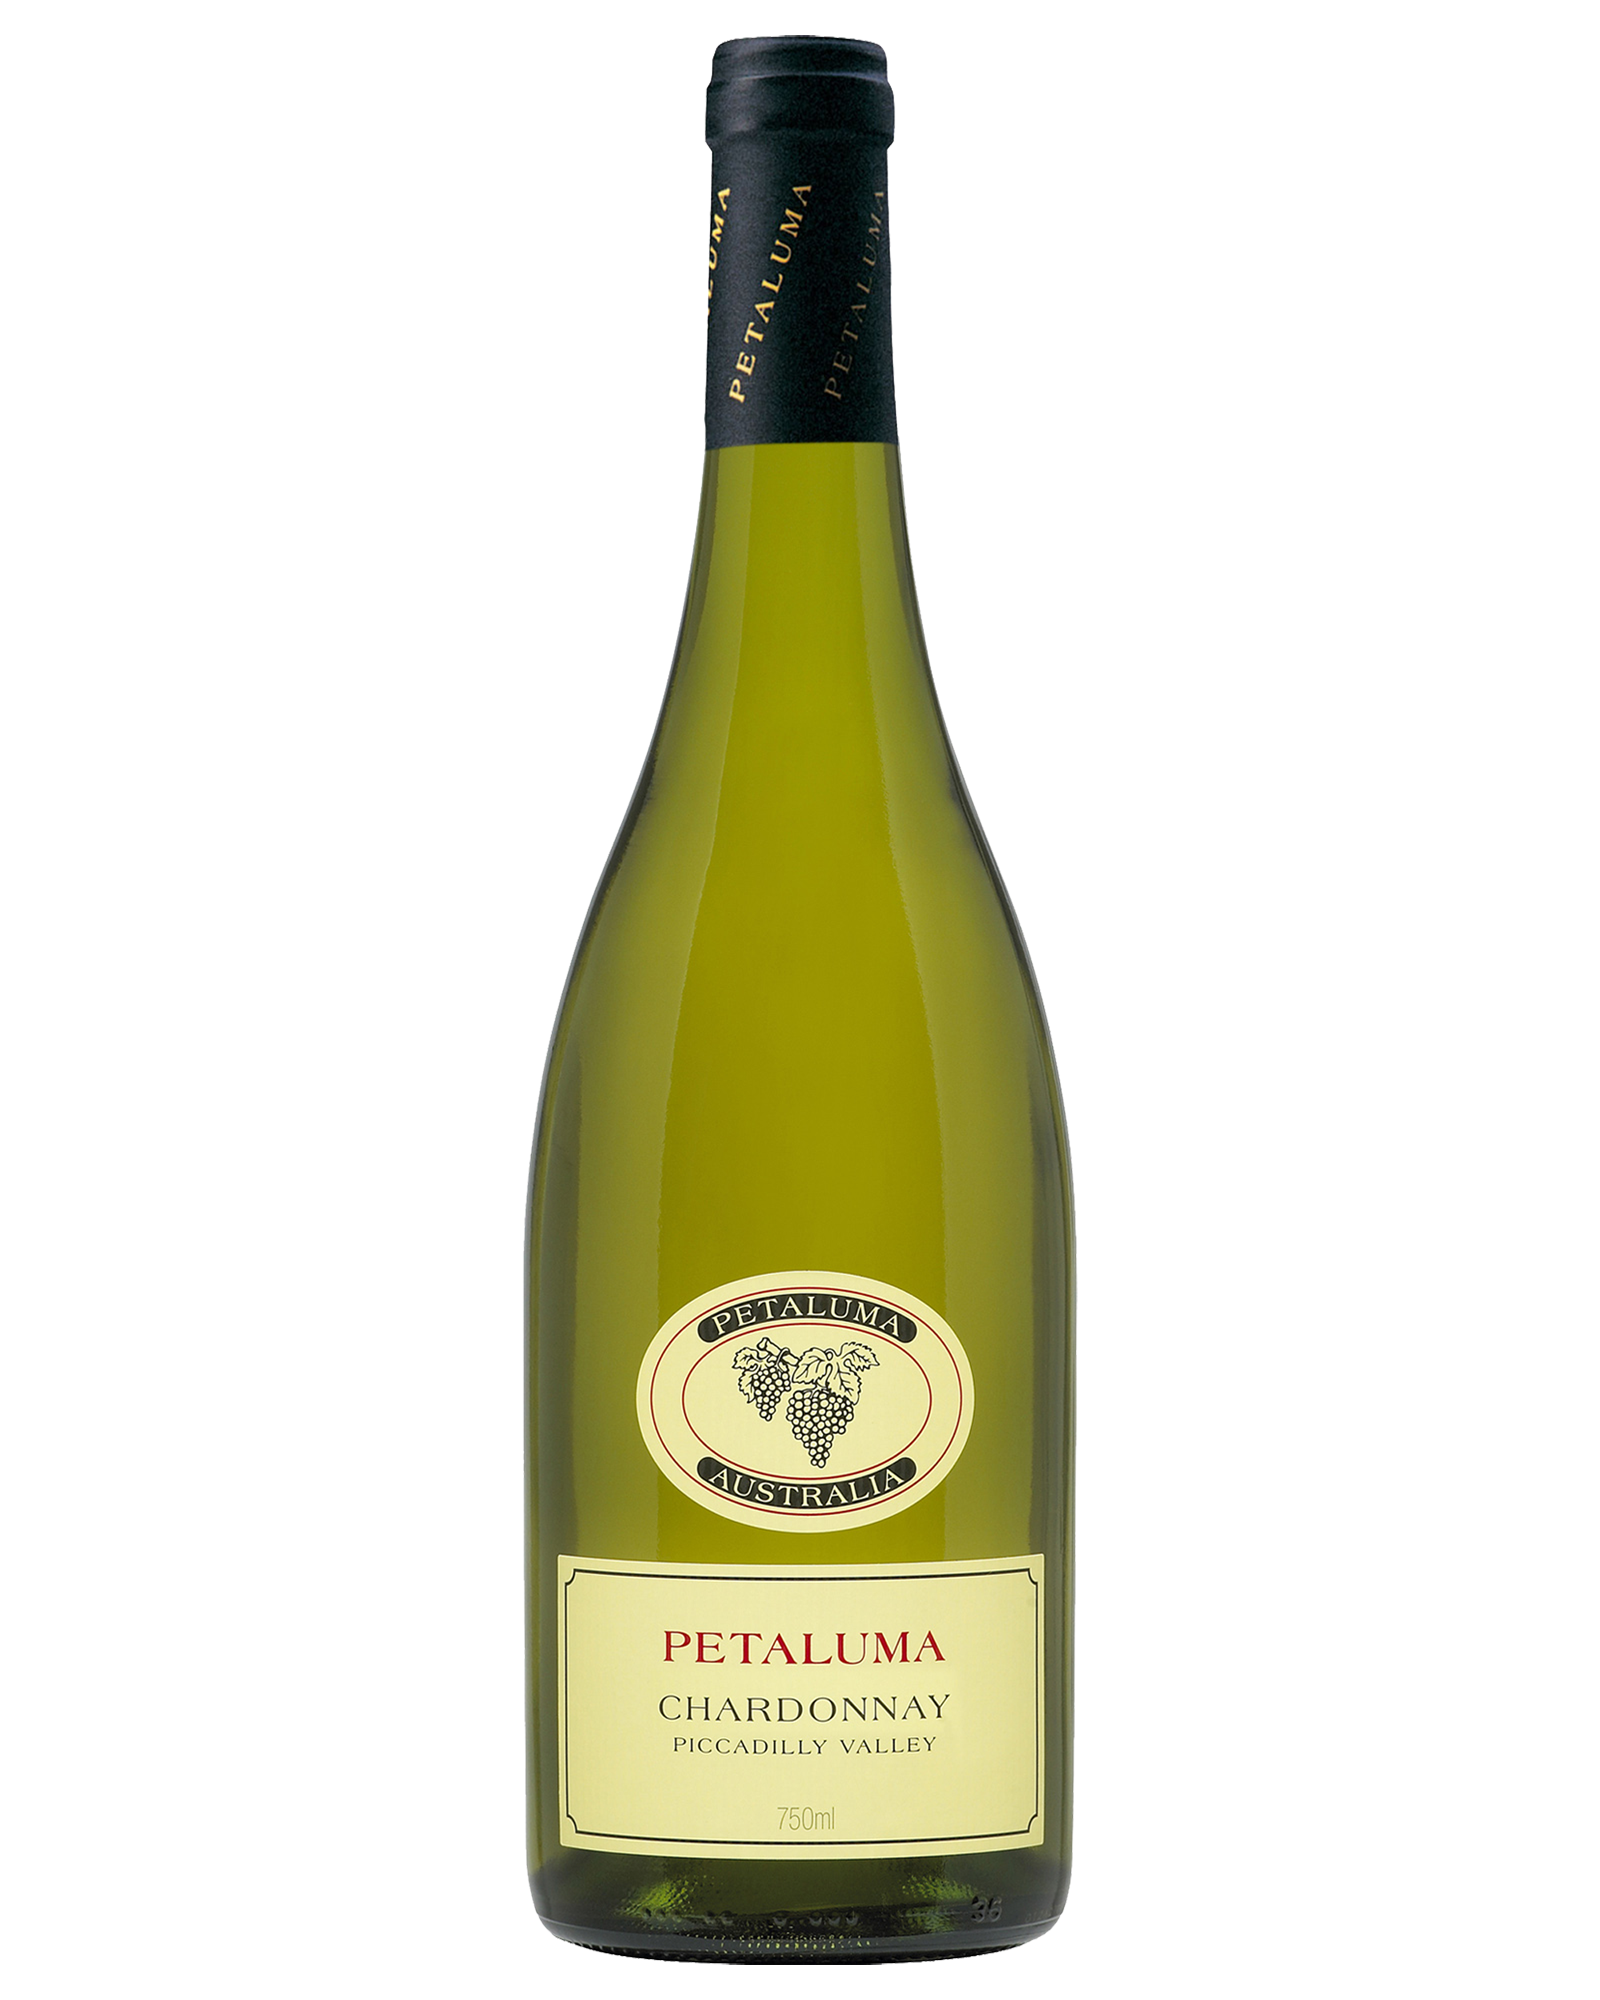 Petaluma Chardonnay 2001